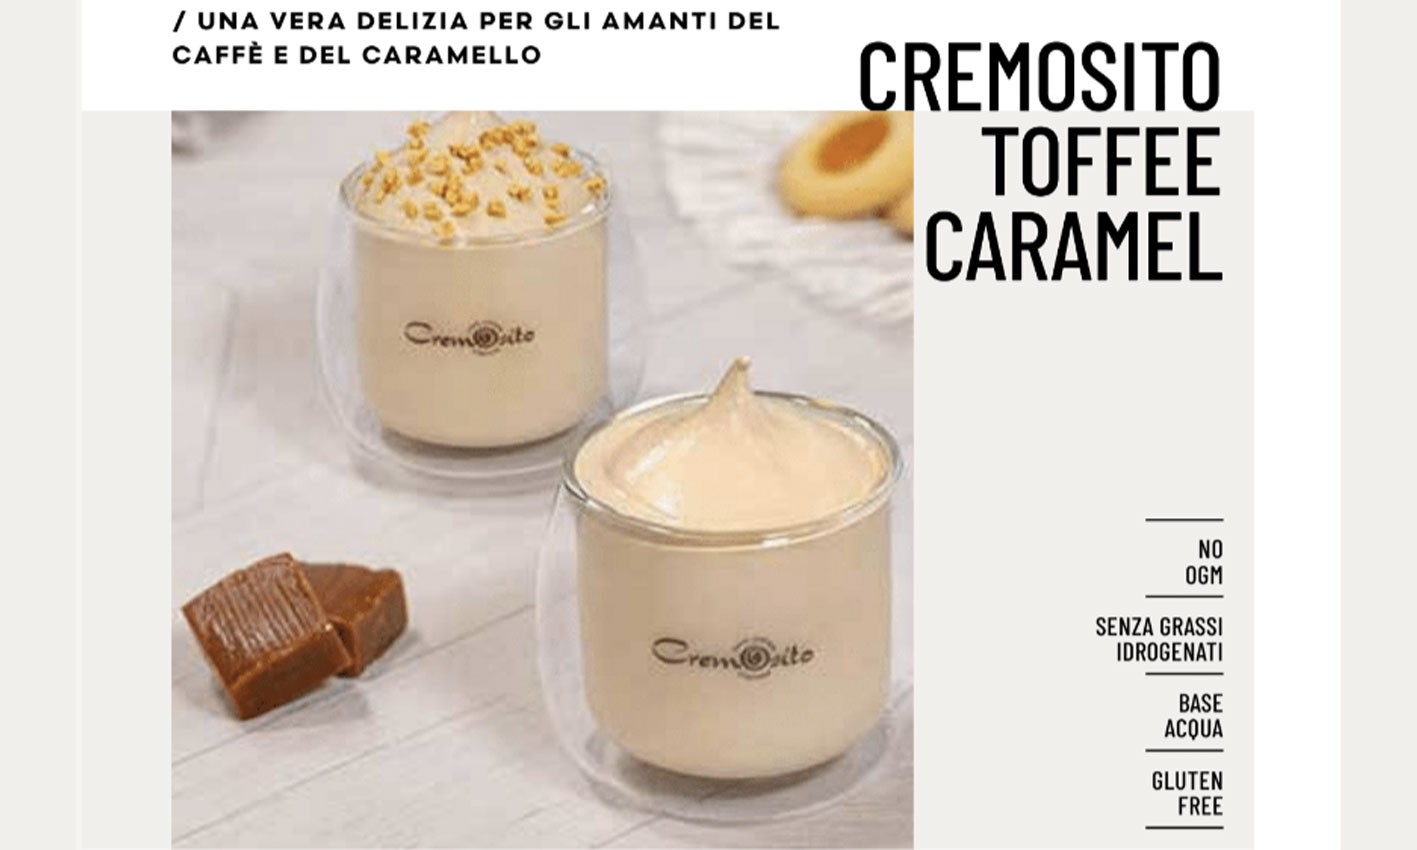 The new Cremosito caramel toffee cold coffee cream